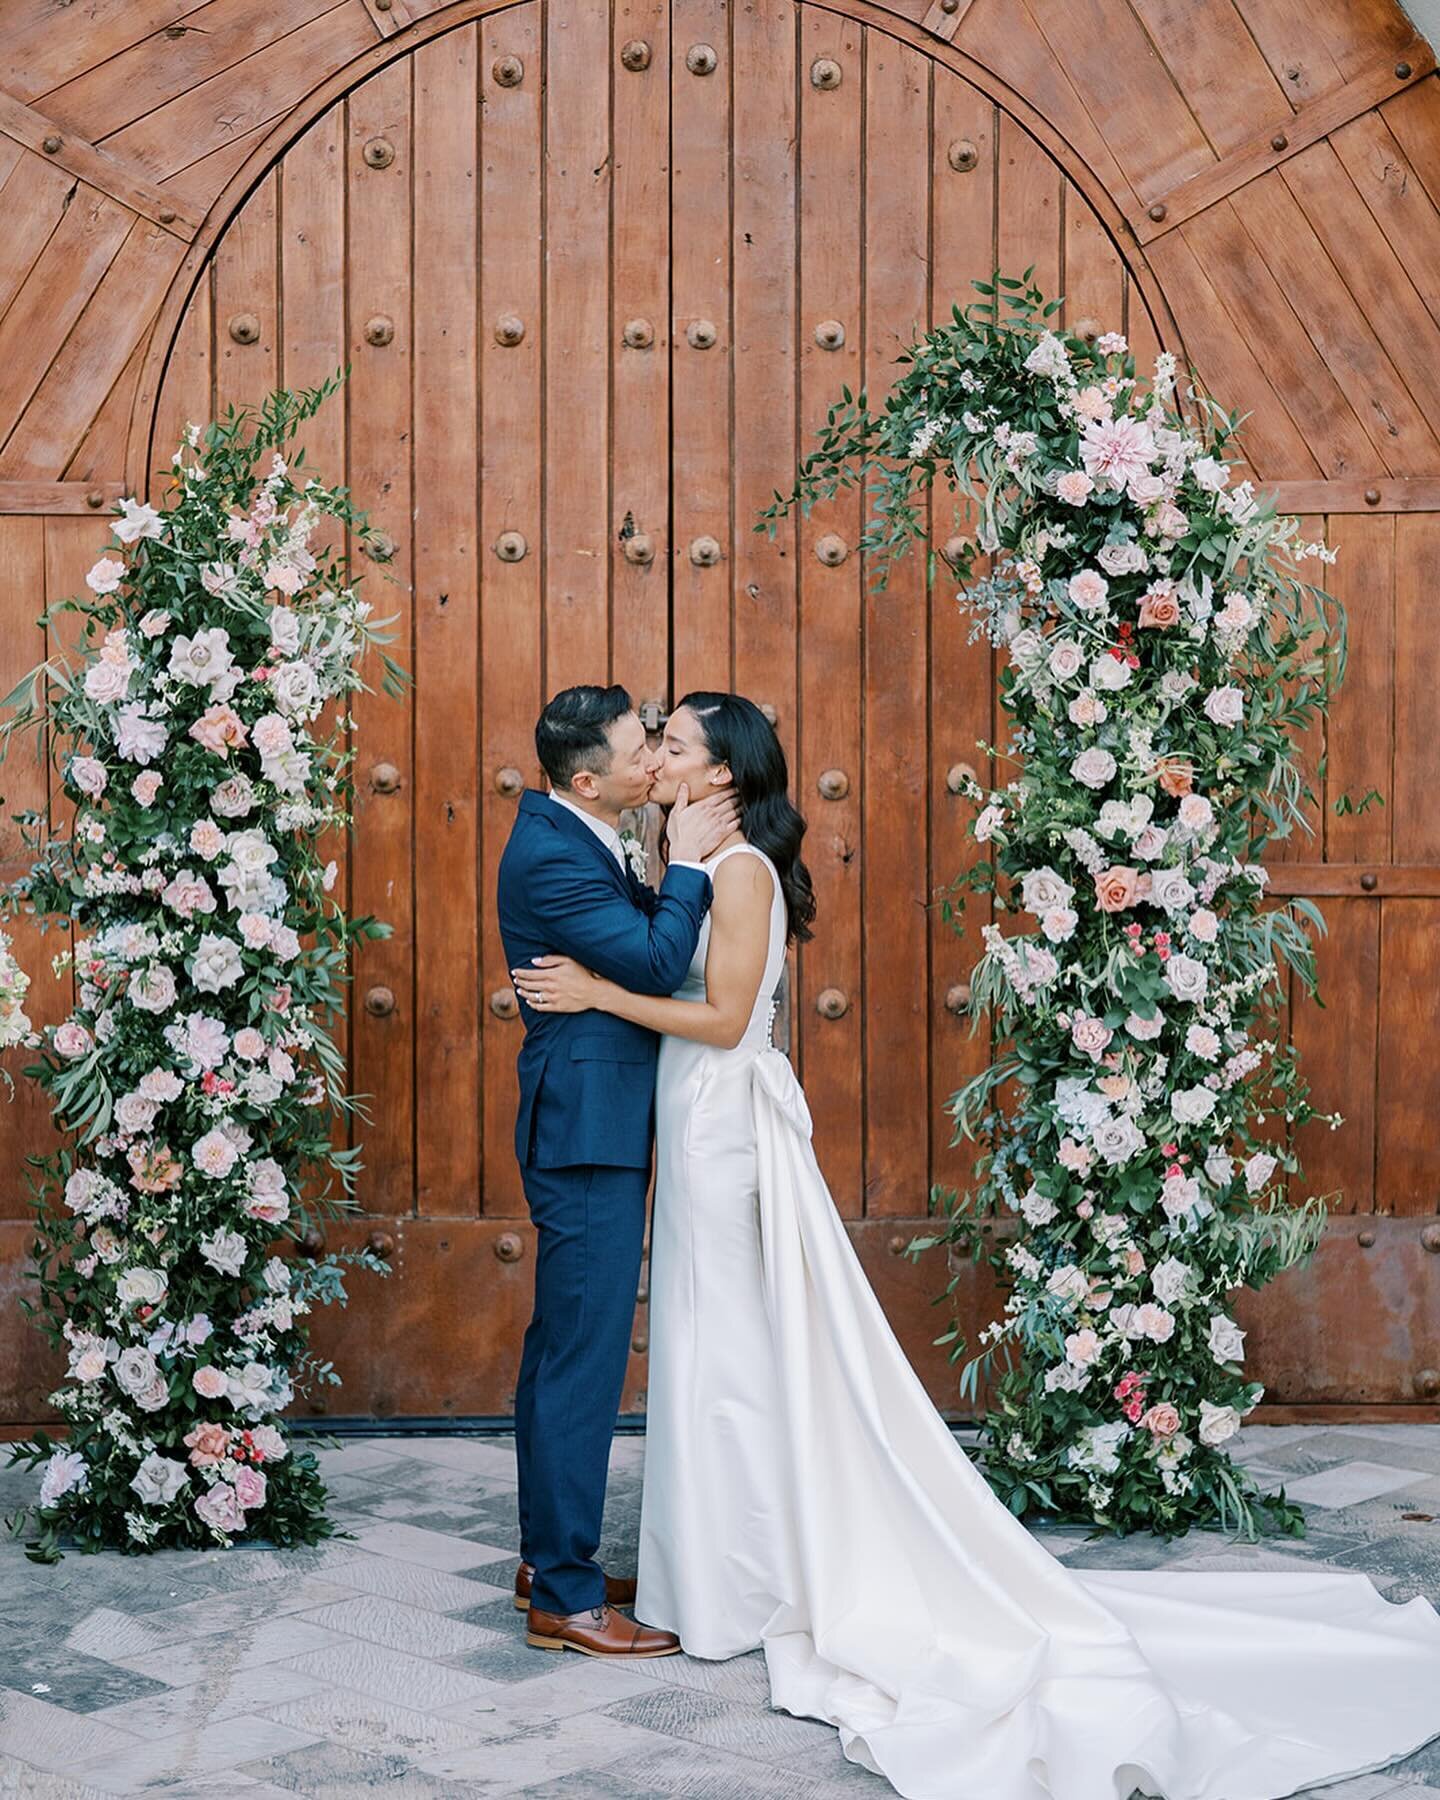 Gorgeous ceremony florals for a gorgeous couple